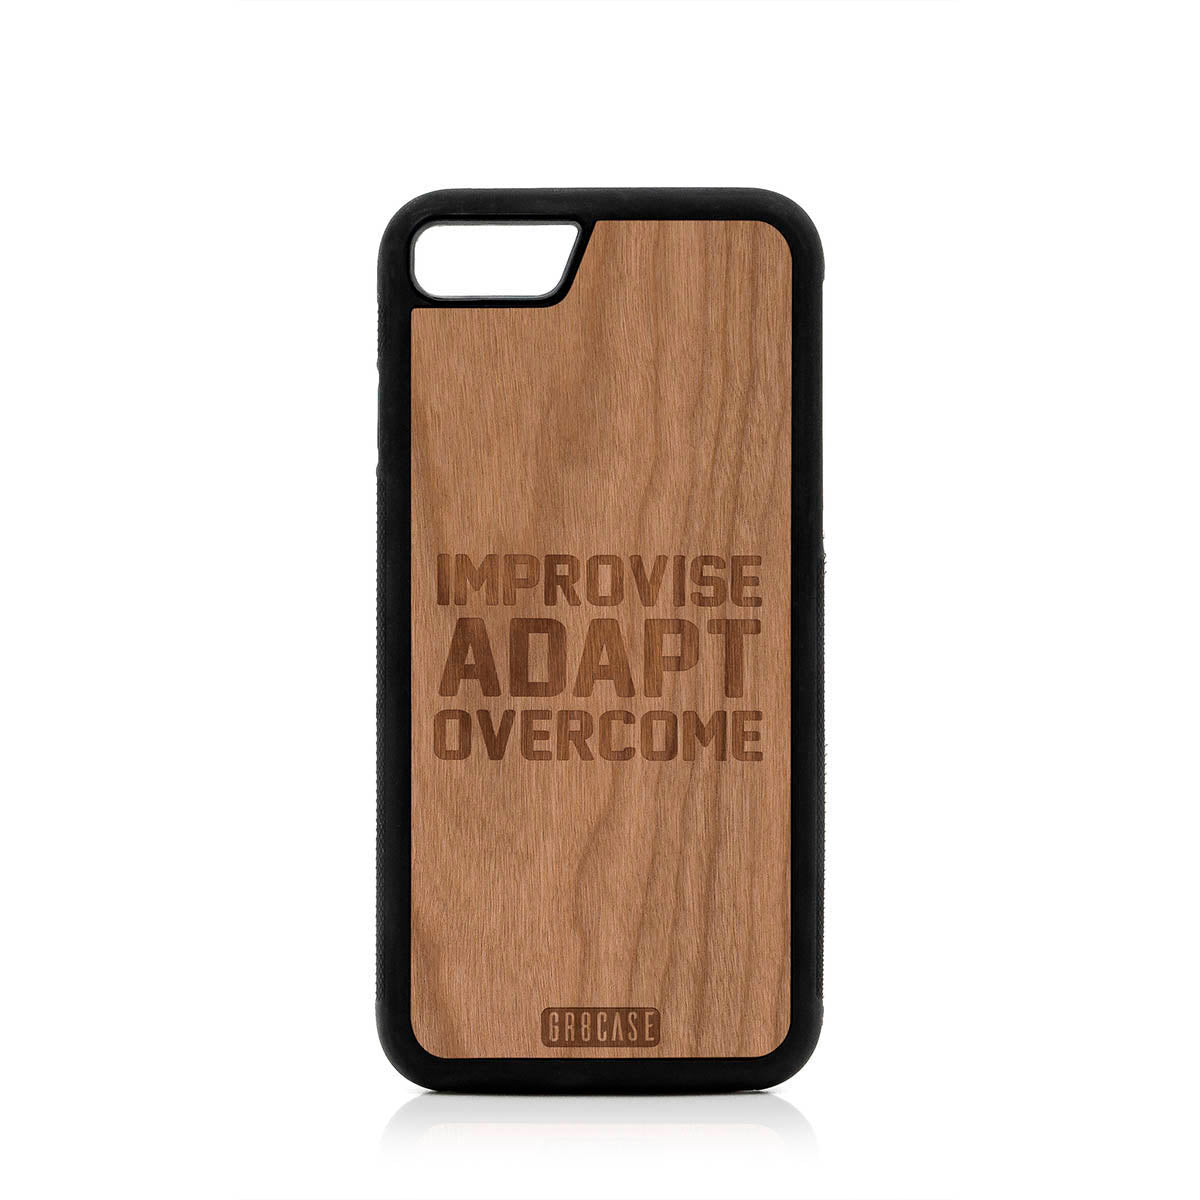 Improvise Adapt Overcome Design Wood Case For iPhone SE 2020